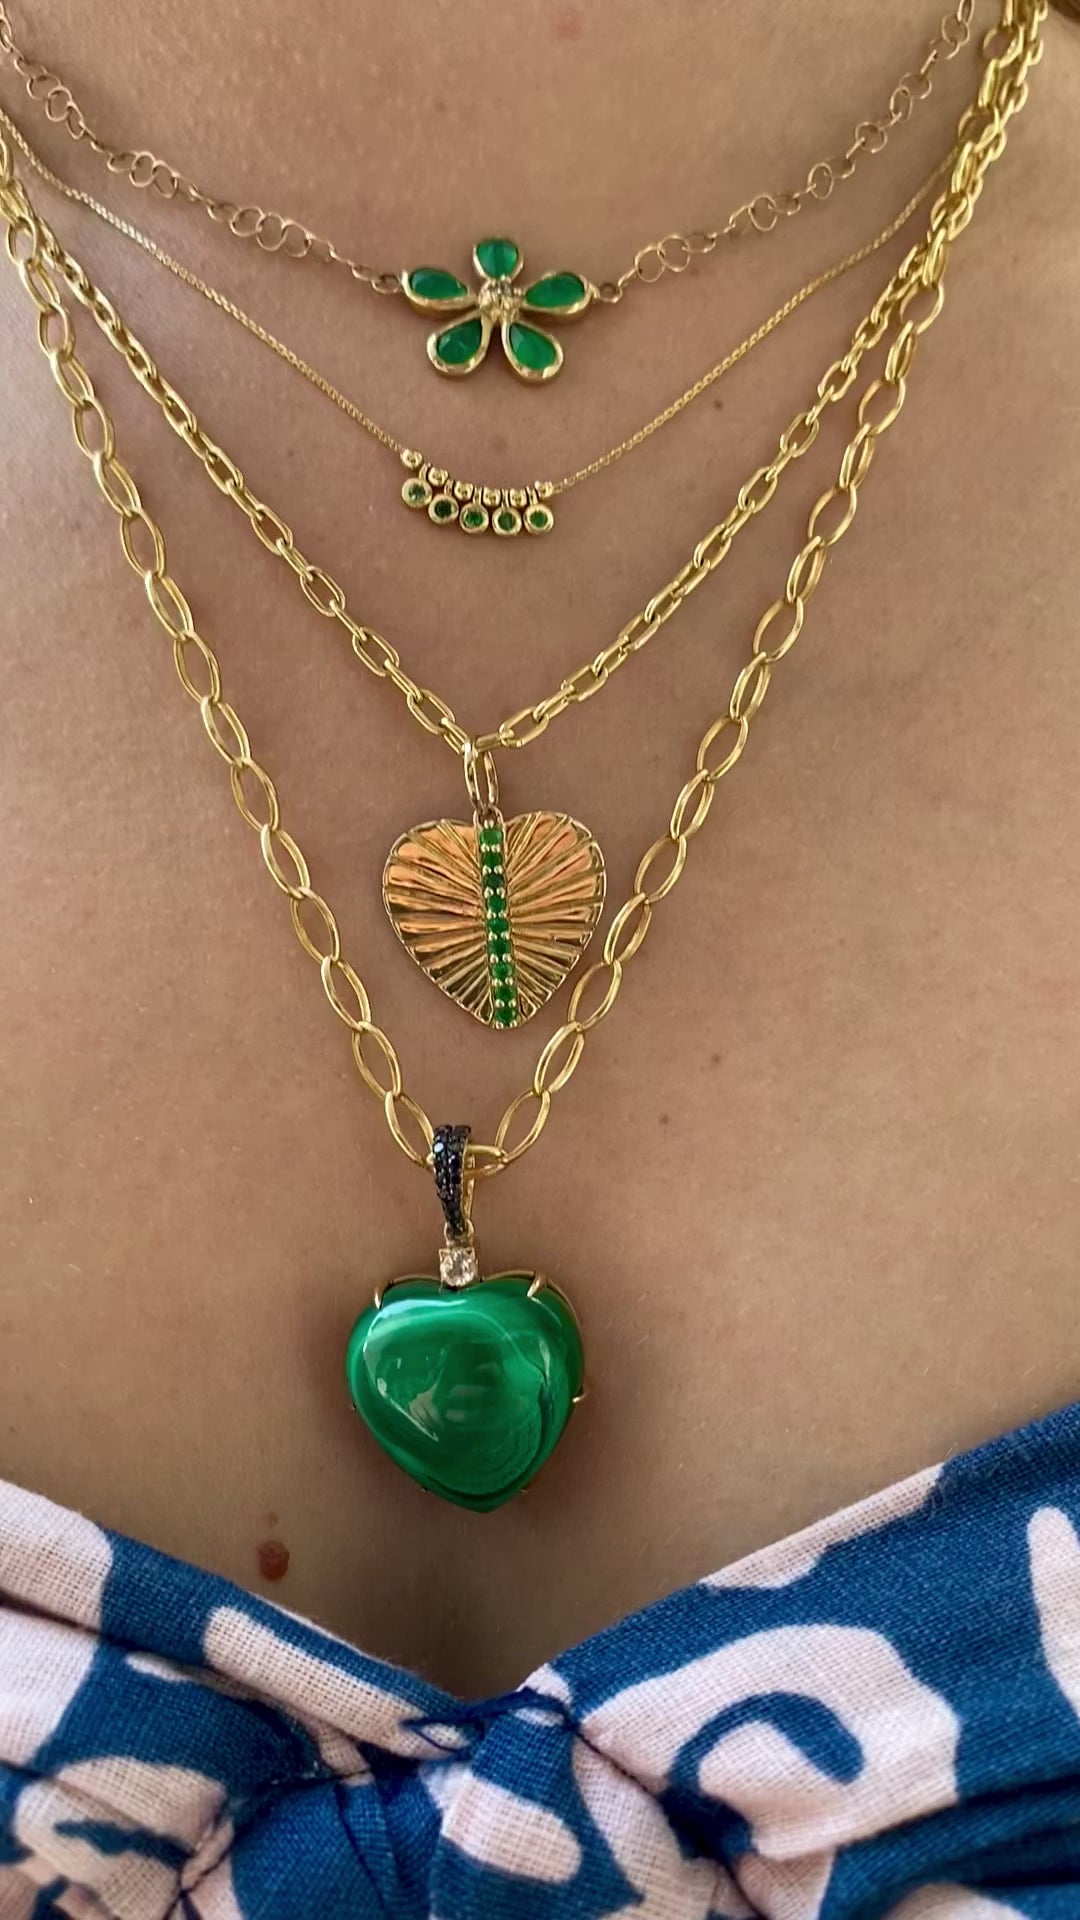 Emerald Bezel Confetti Necklace